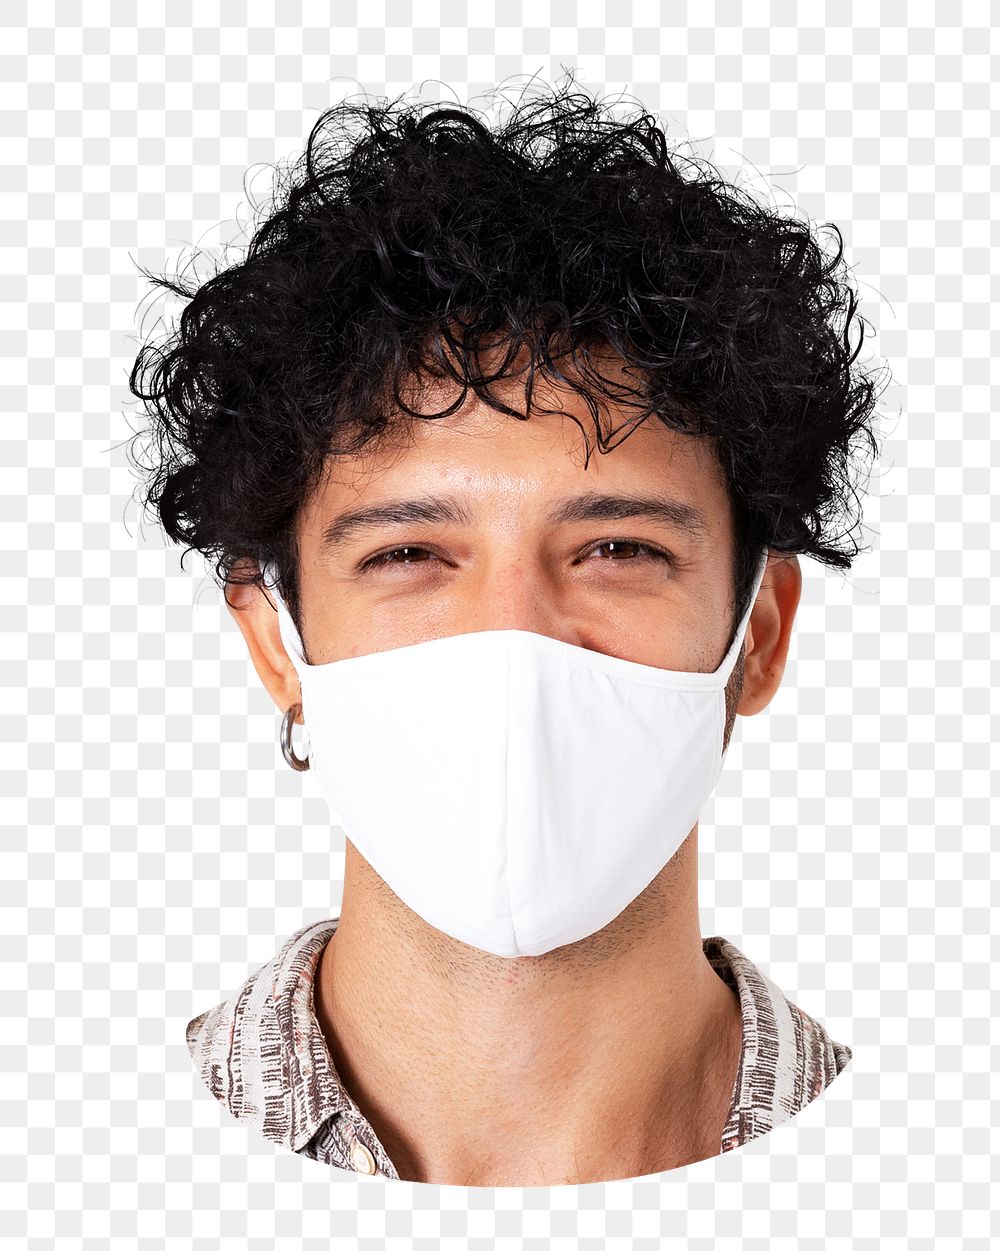 Png face mask, man closeup image on transparent background